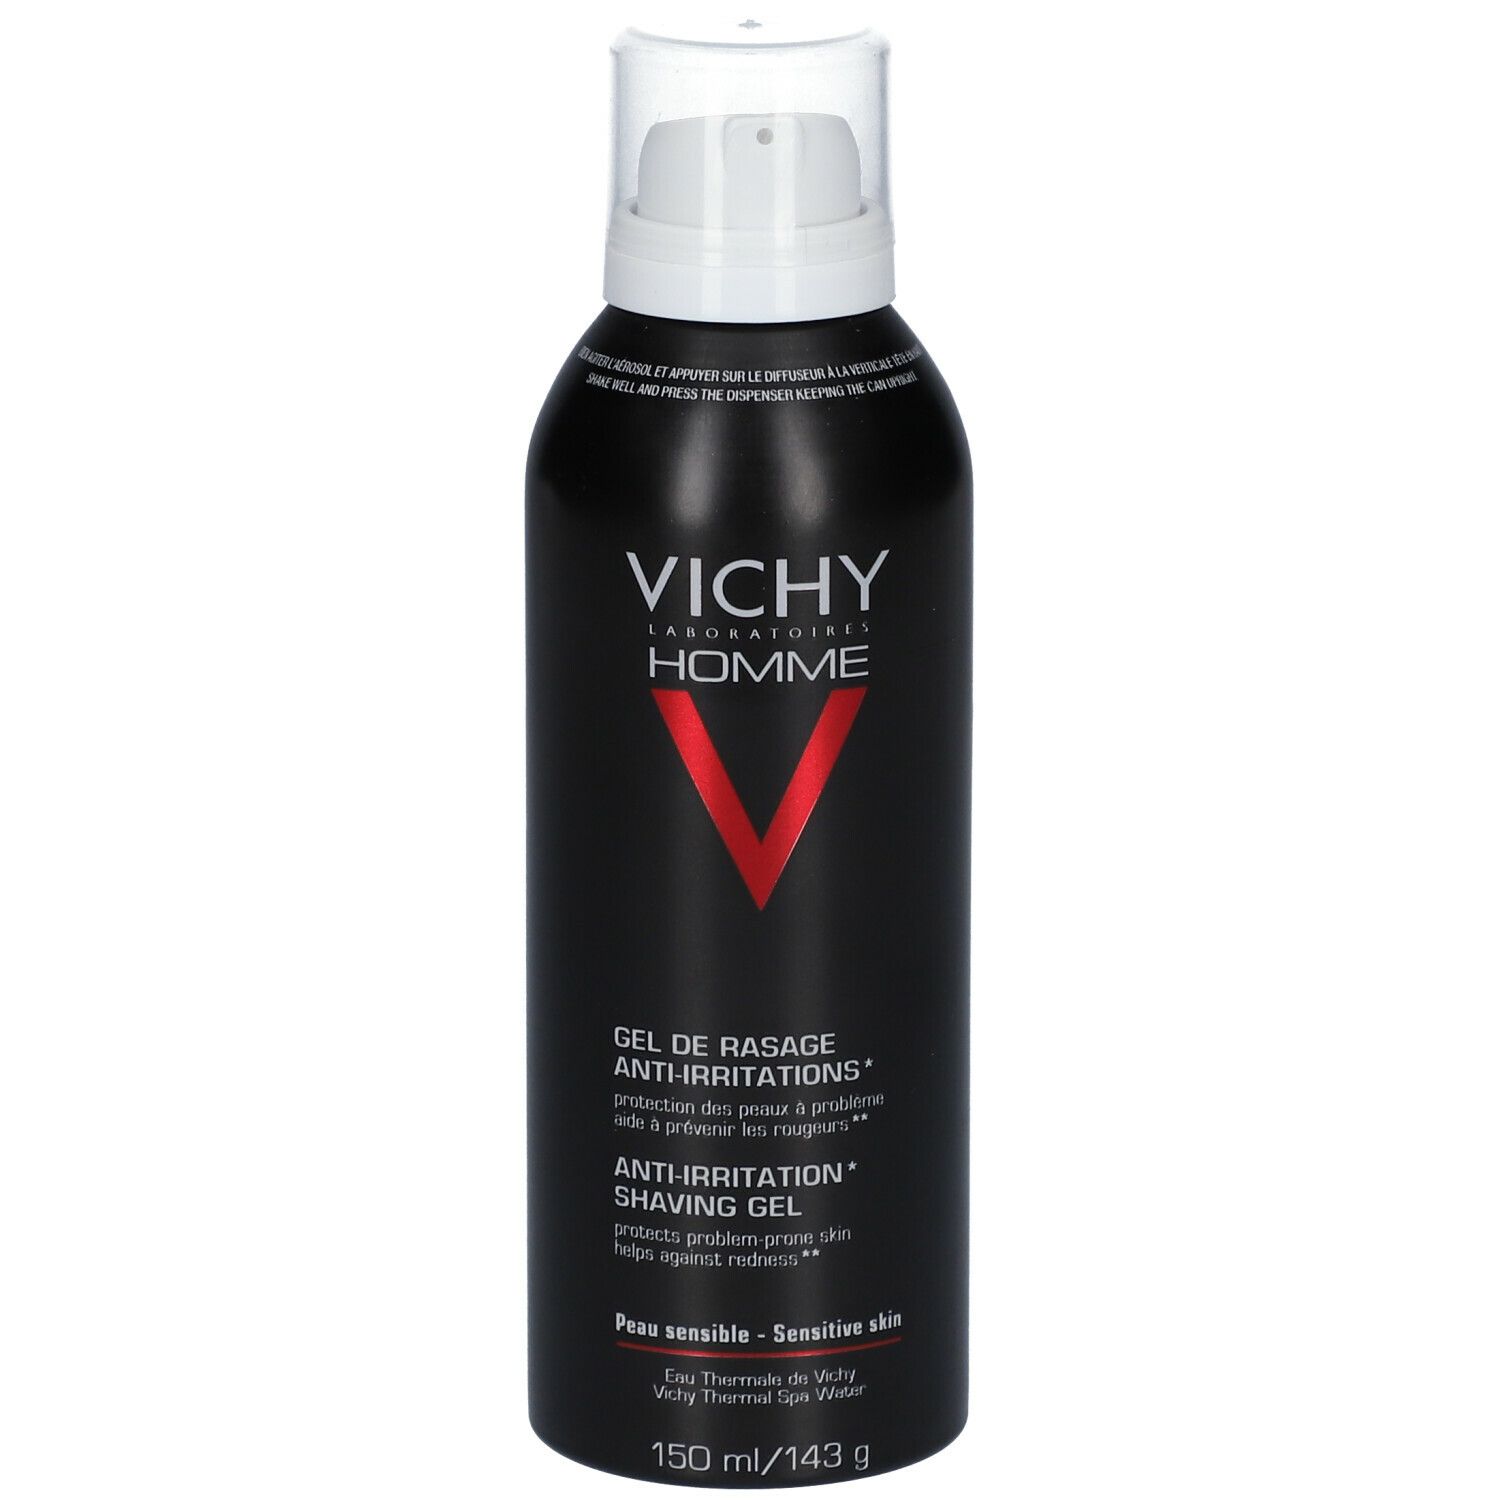 VICHY Homme Gel de rasage - Anti-Irritation